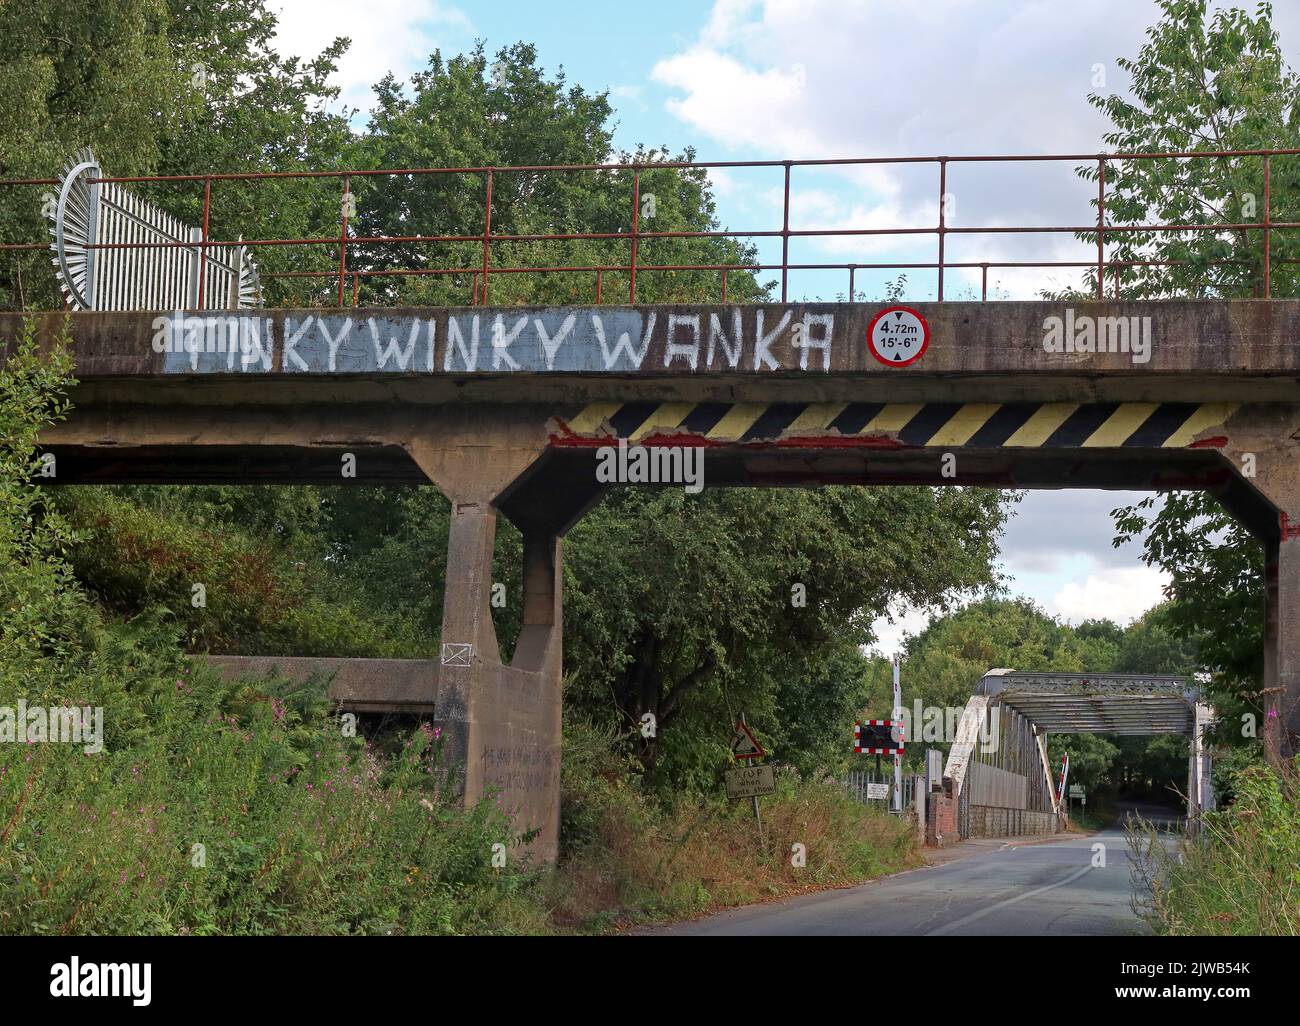 Eingang Port Warrington, Graffiti auf der Brücke, Tinky Winky Wanka, Moore LN, Warrington, Cheshire, England, Großbritannien, WA4 6T - Ocean Gateway Stockfoto